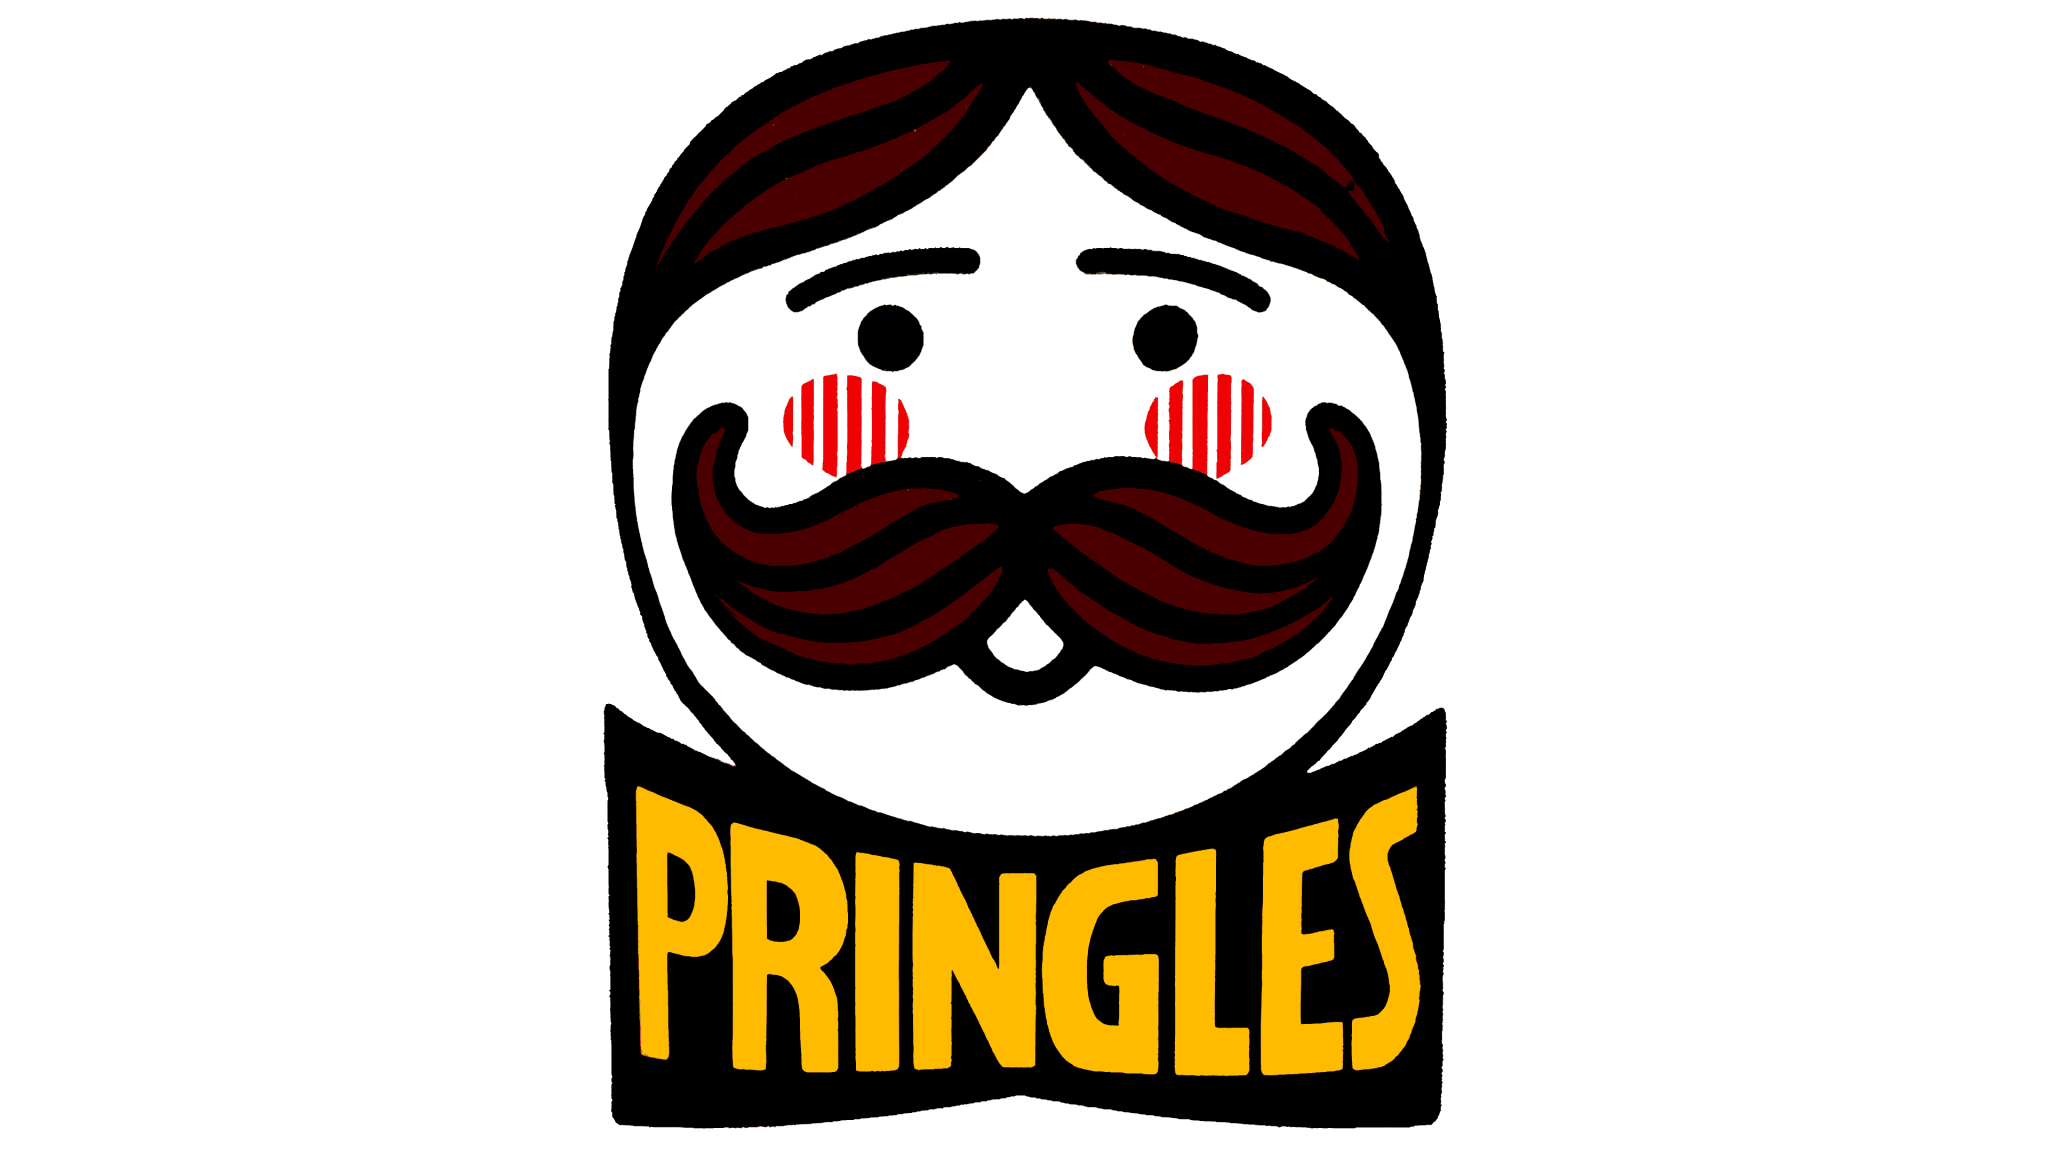 Old Pringles Logo And New Pringles Logo - IMAGESEE